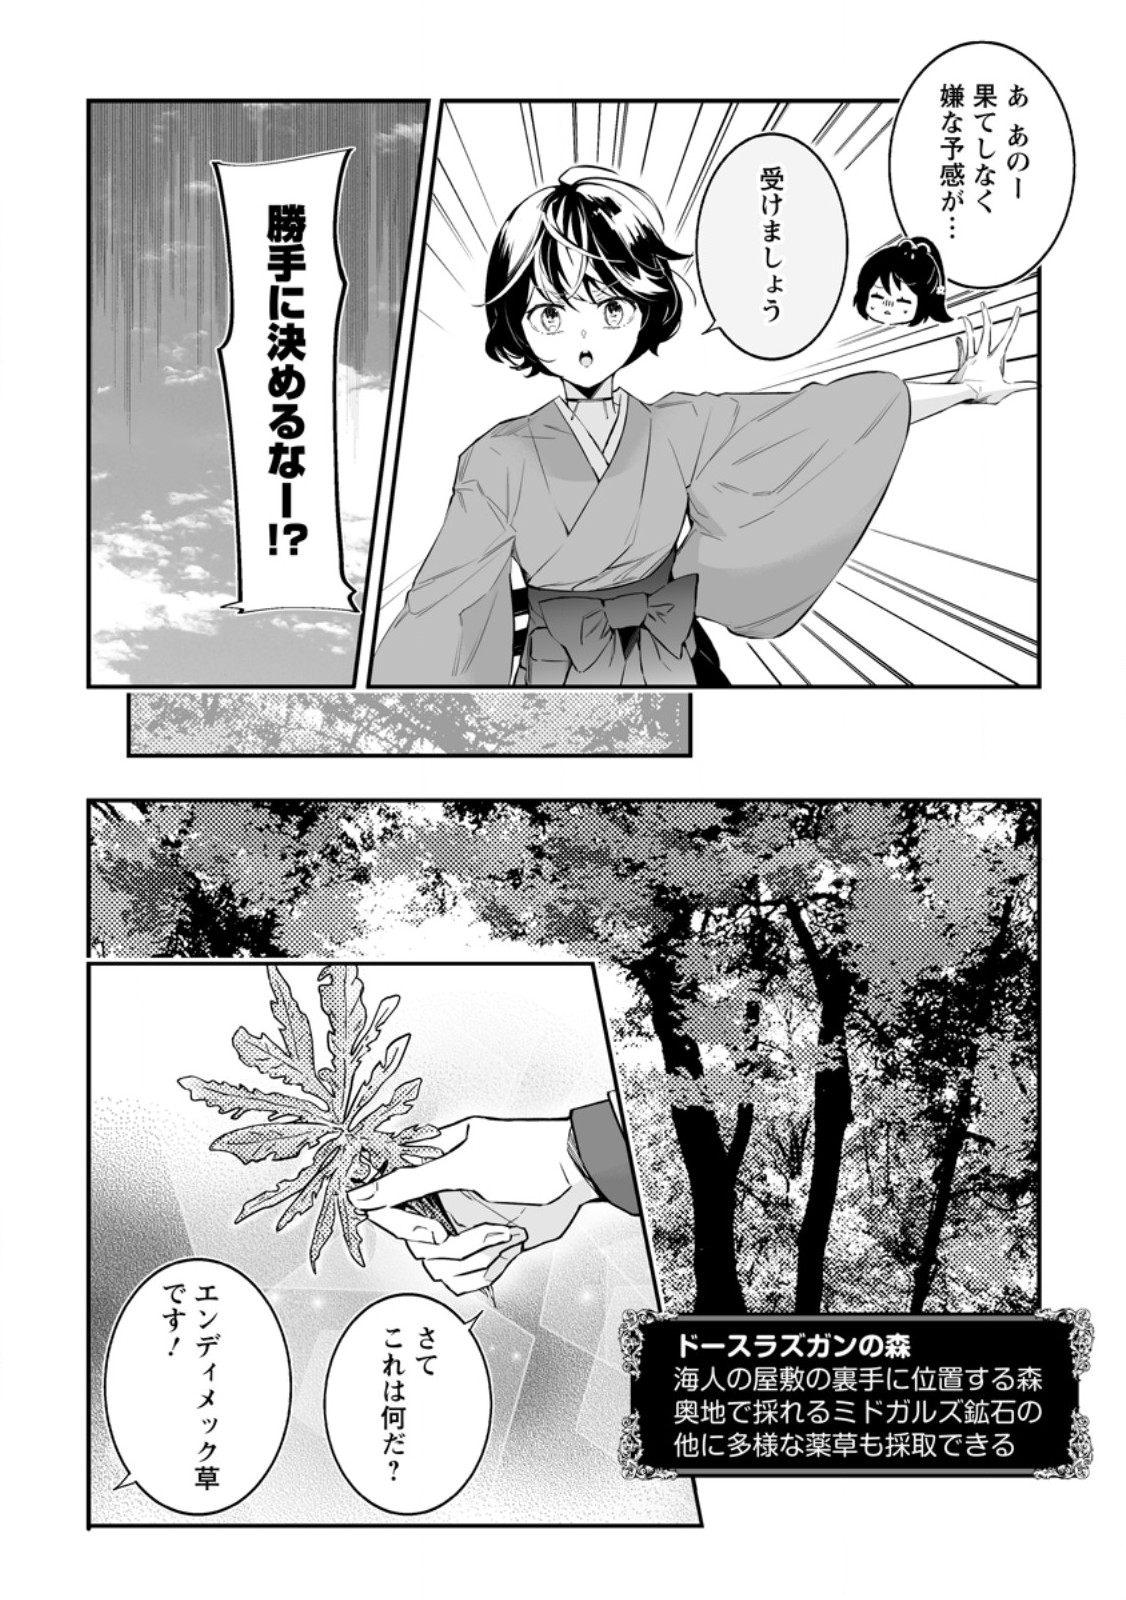 Hakui no Eiyuu - Chapter 35.2 - Page 2